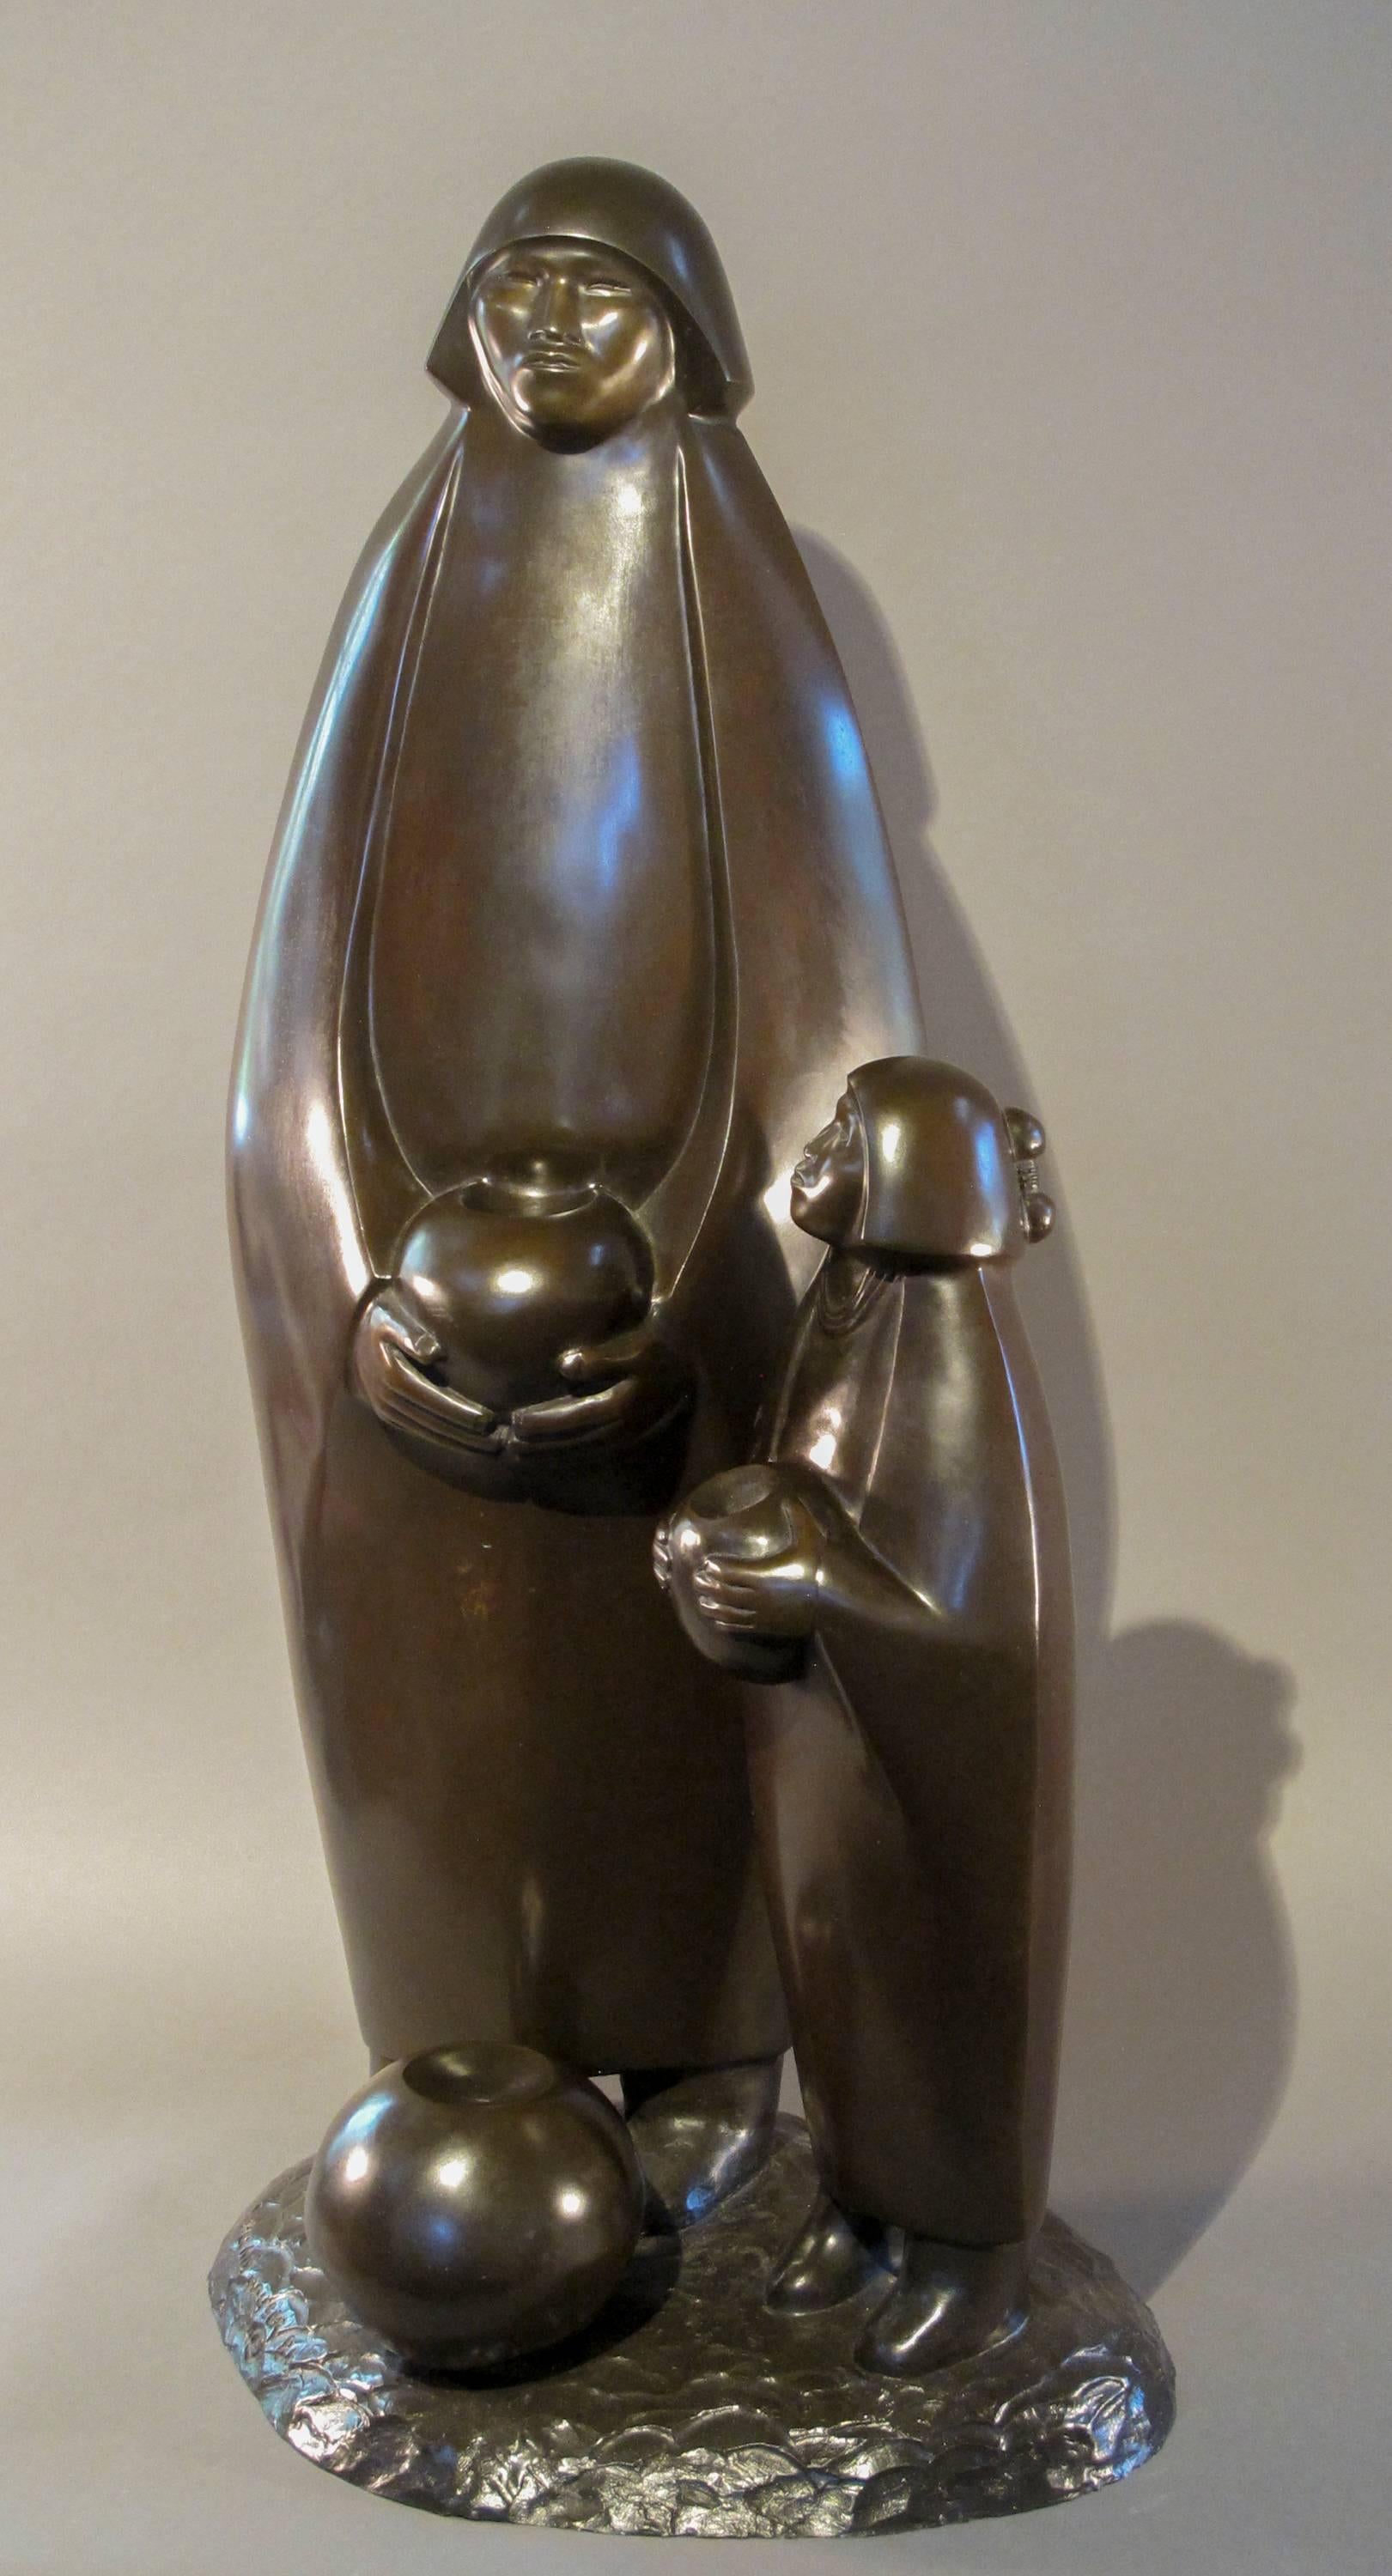 Allan Houser Figurative Sculpture - The Young Potter, bronze sculpture, Pueblo mother and child